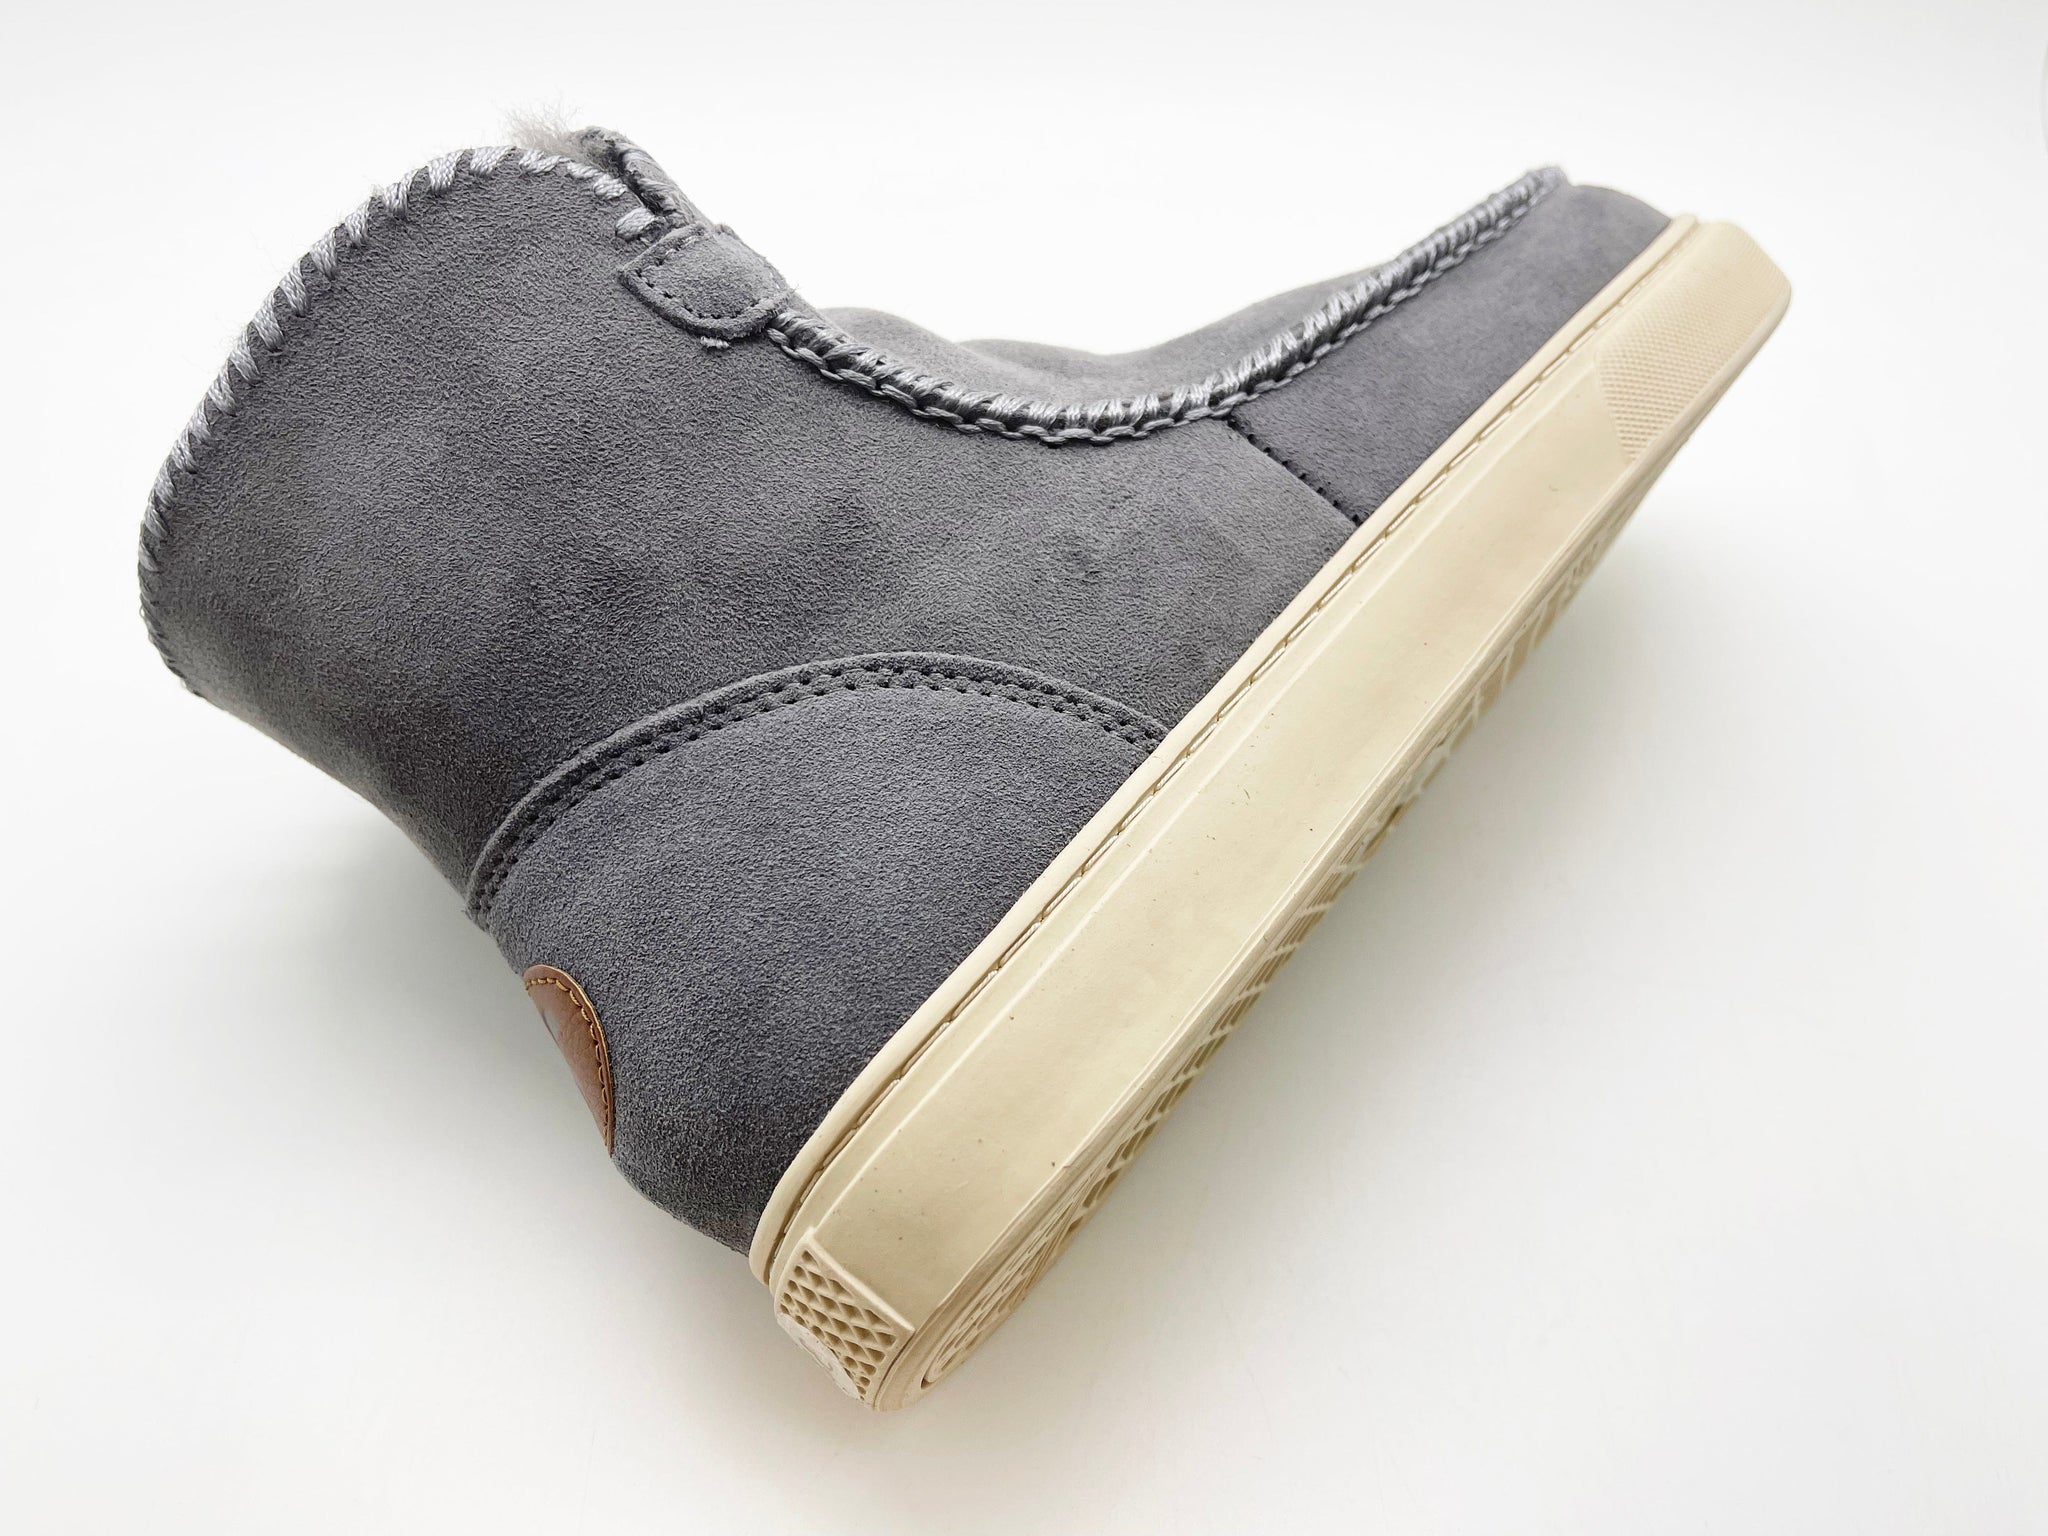 Calçat NAT 2 thies 1856 ® Sneakerboot 2 gris fosc (W) moda sostenible moda ètica